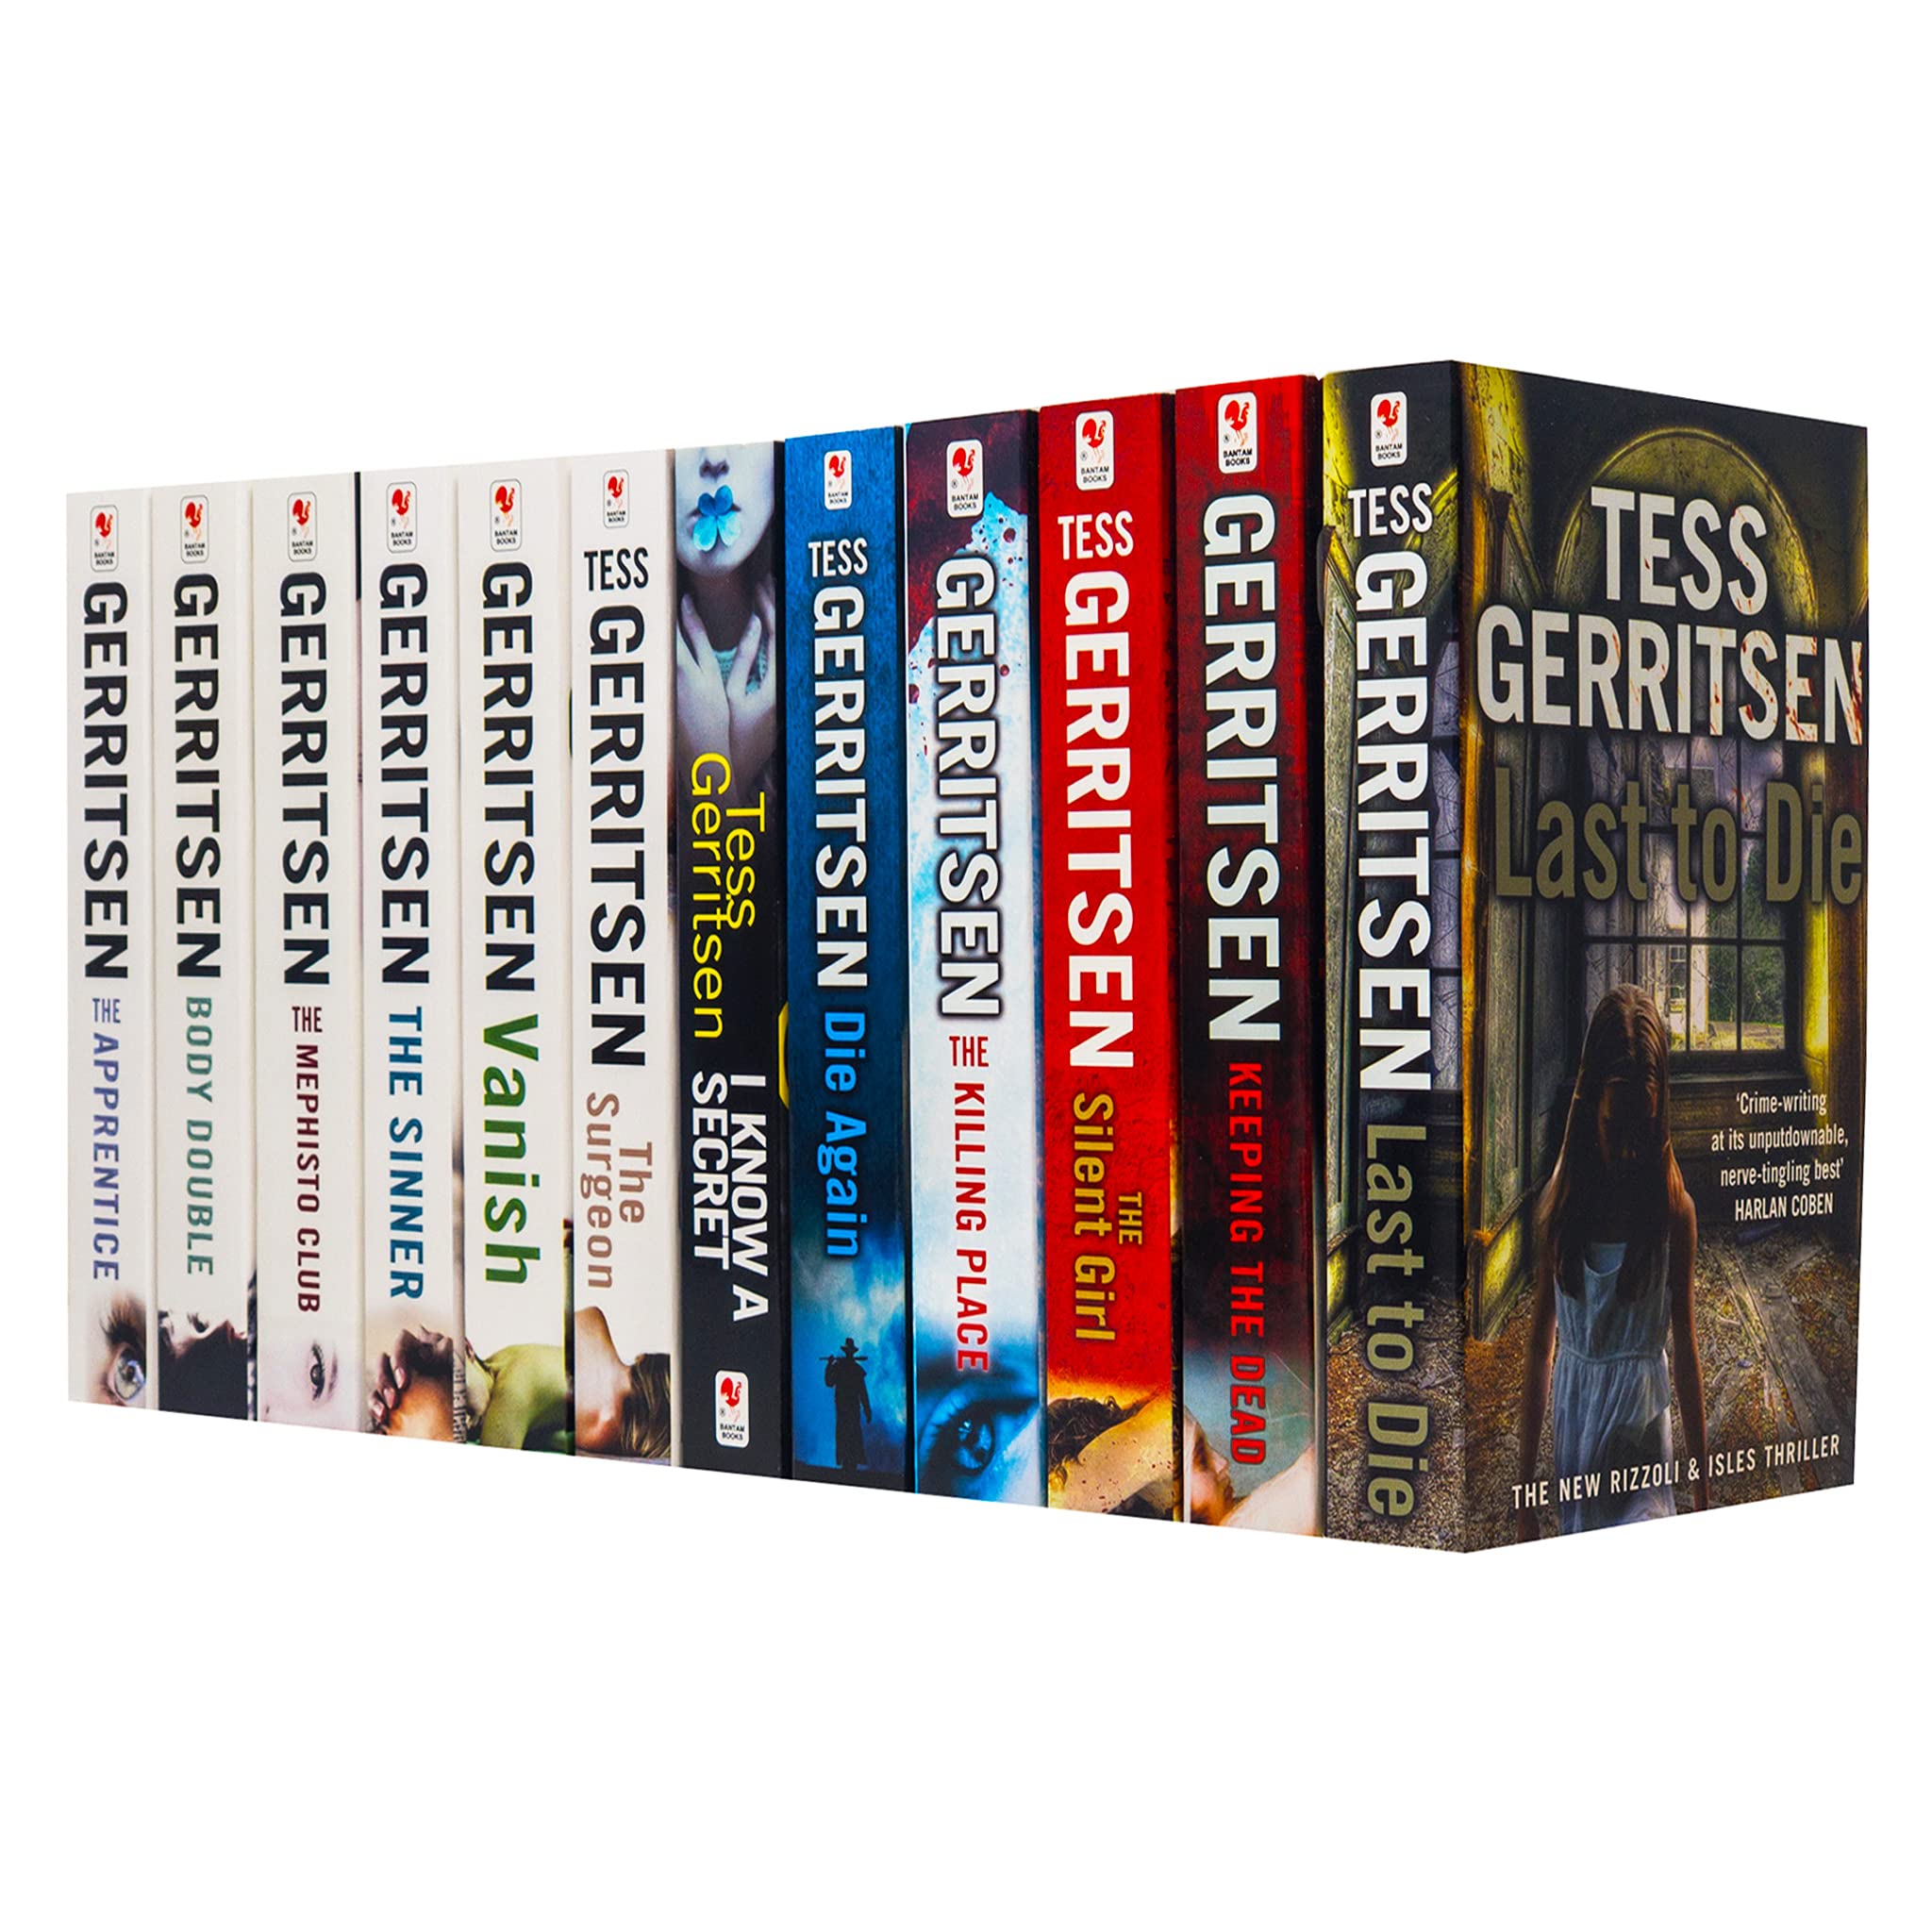 Tess Gerritsen Rizzoli & Isles Thriller 12 Books Collection Set, Apprentice Paperback - Lets Buy Books